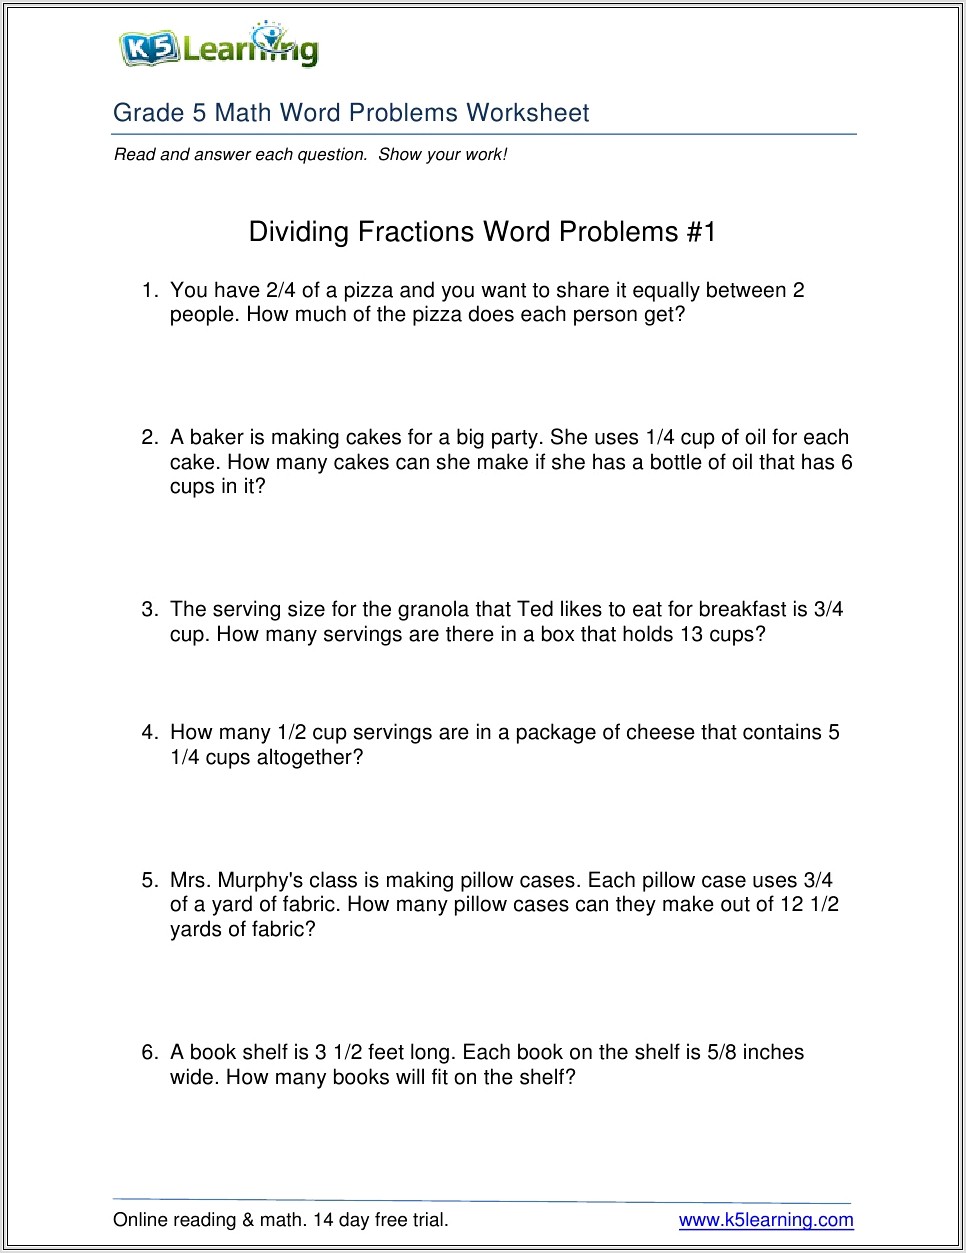 Grade 5 Math Word Problems Worksheet Answers